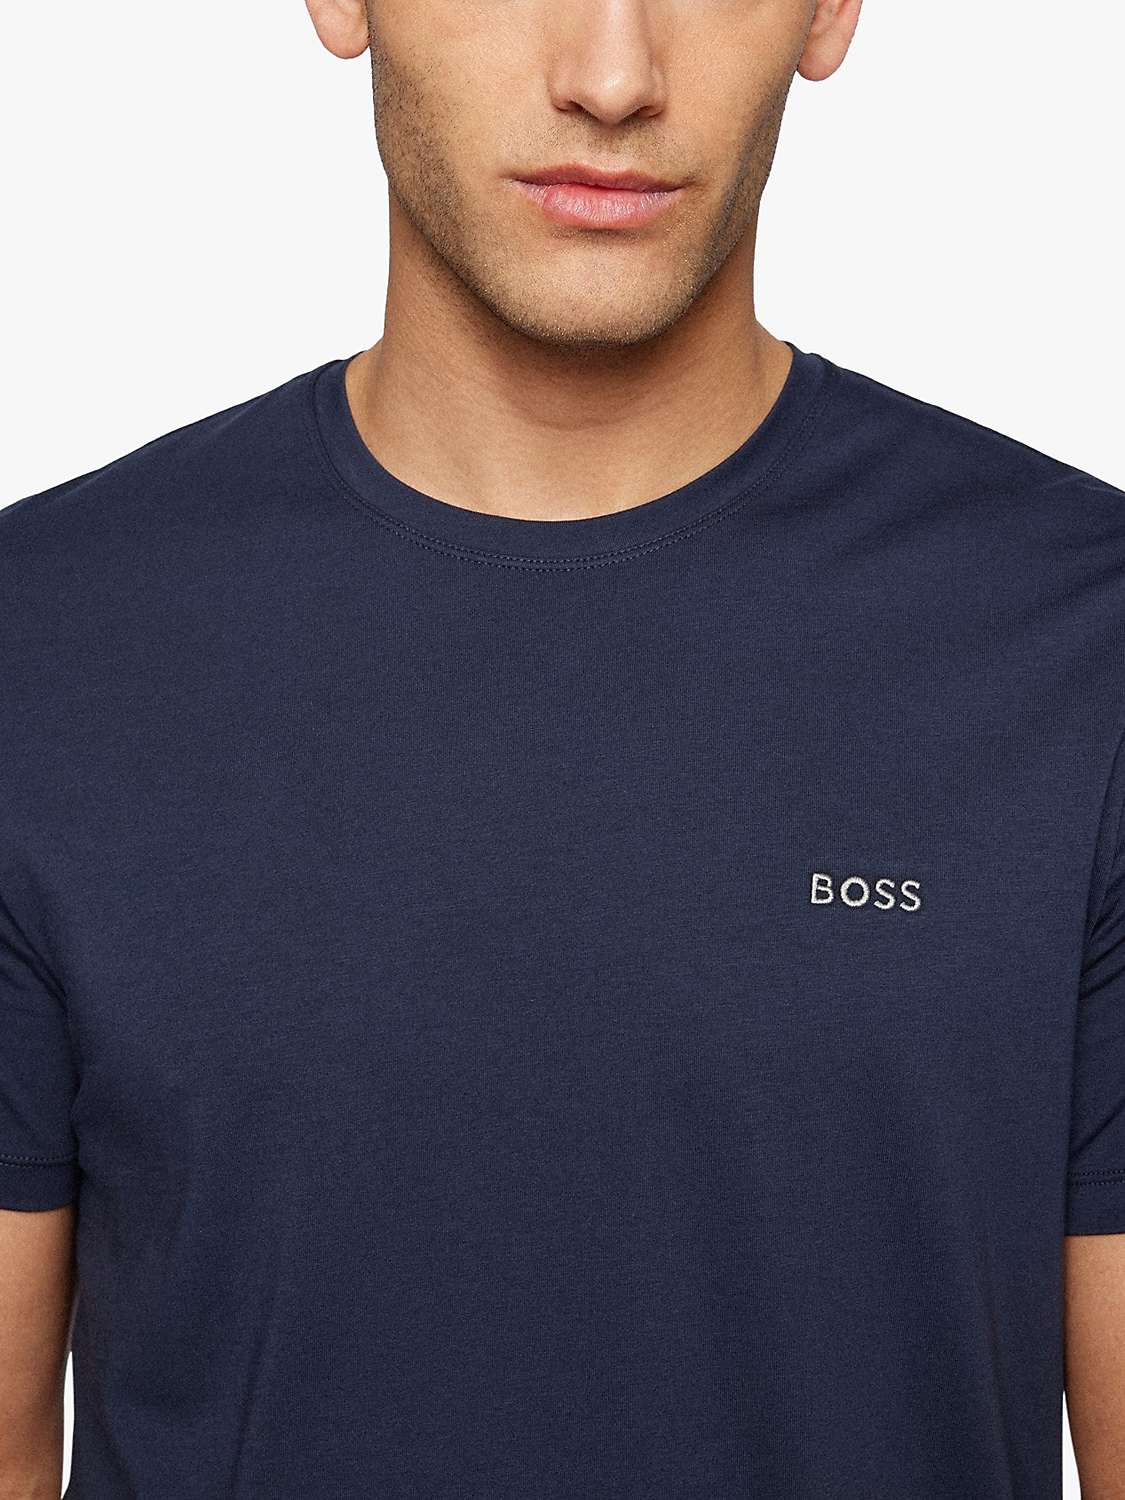 Buy BOSS Cotton Blend Lounge T-Shirt Online at johnlewis.com